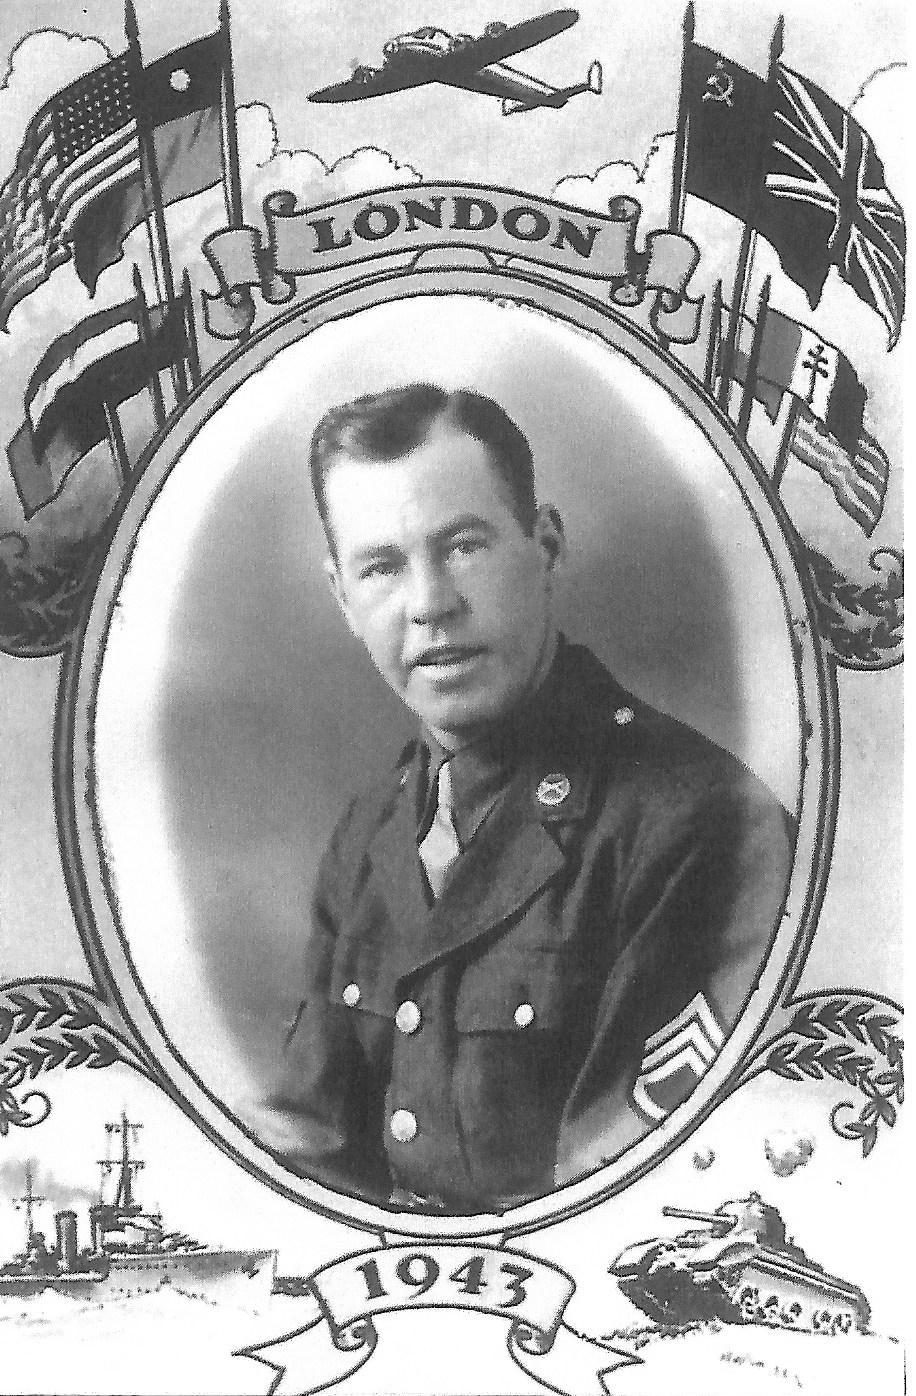 Master Sergeant Everett S. Thomas